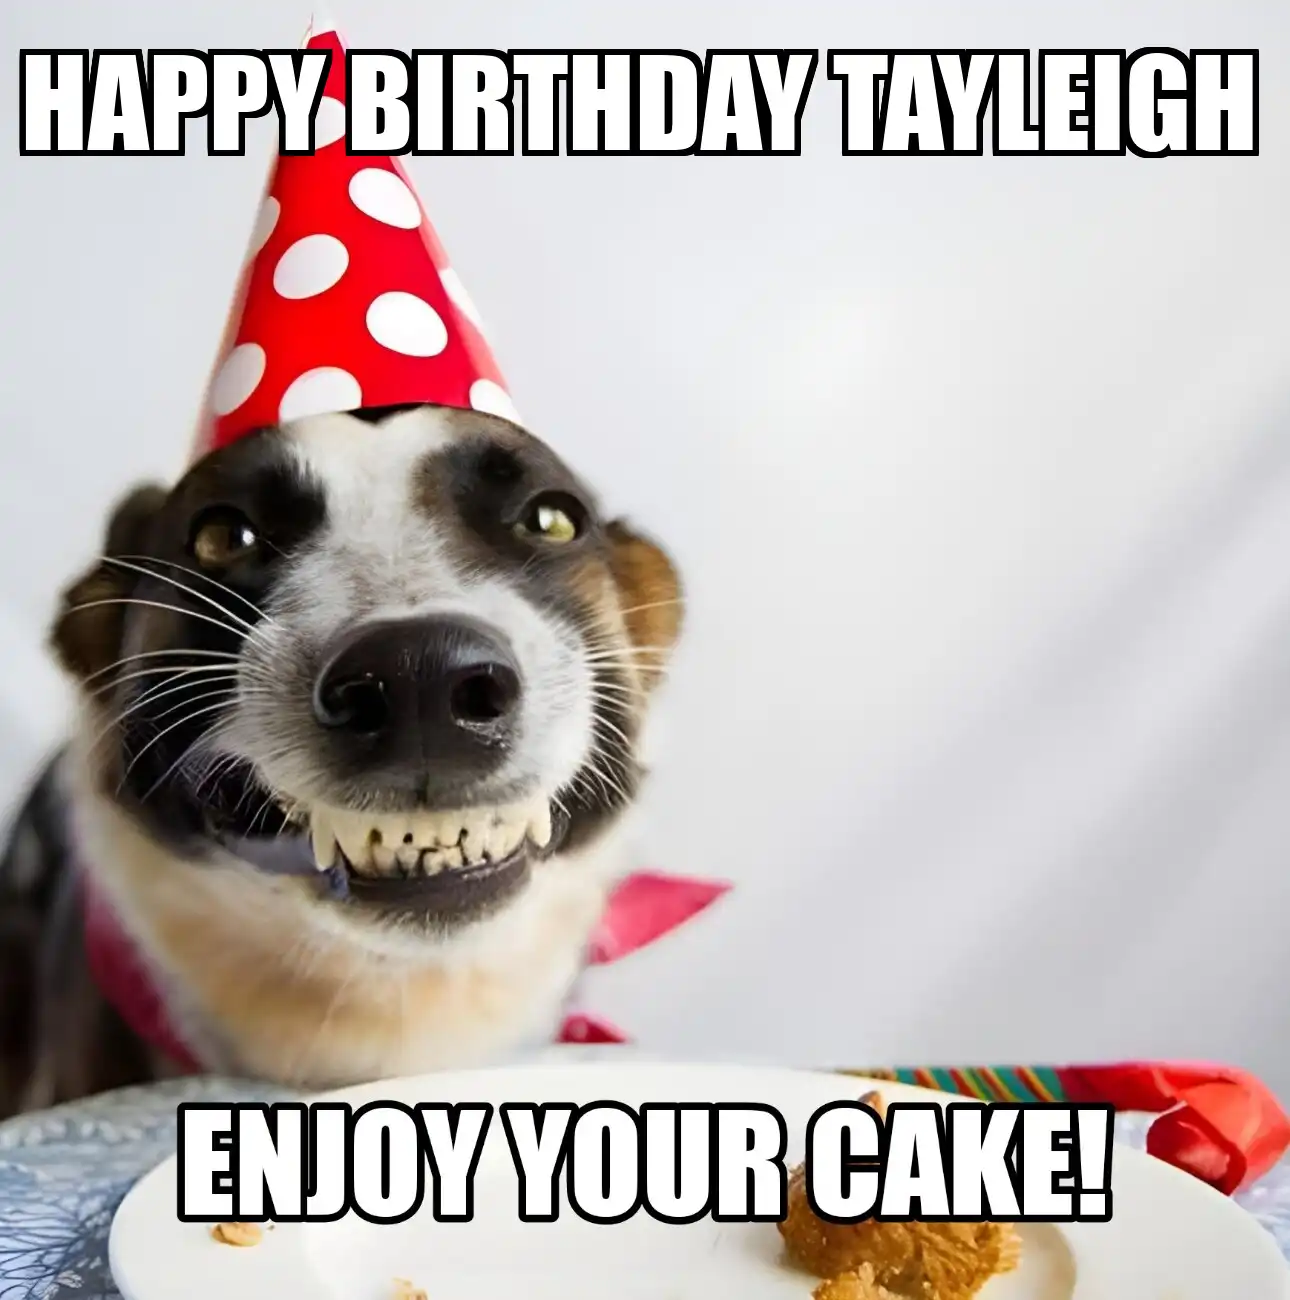 Happy Birthday Tayleigh Enjoy Your Cake Dog Meme